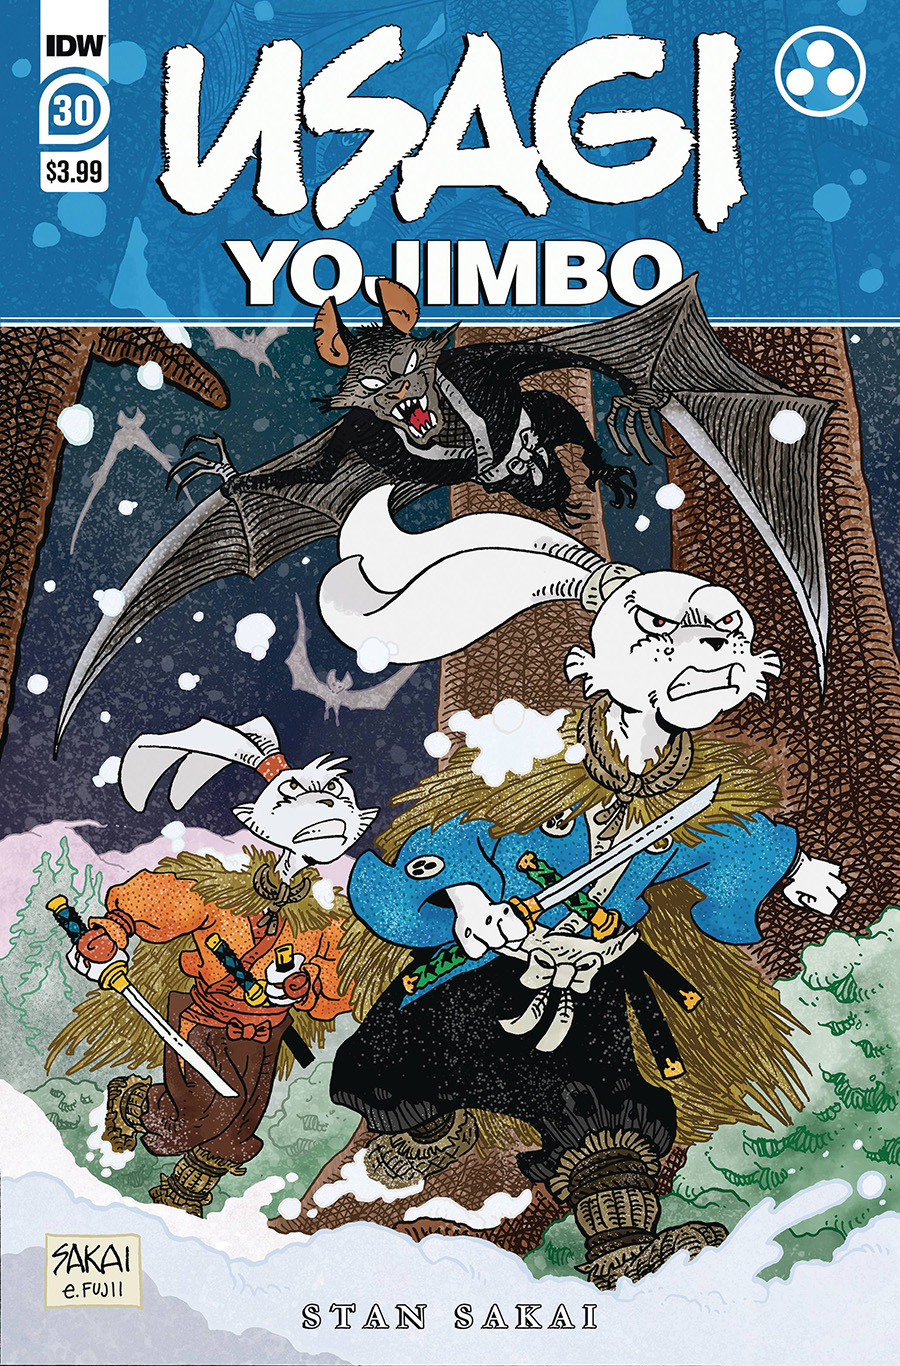 Usagi Yojimbo Vol 4 #30 Cover A Regular Stan Sakai Cover